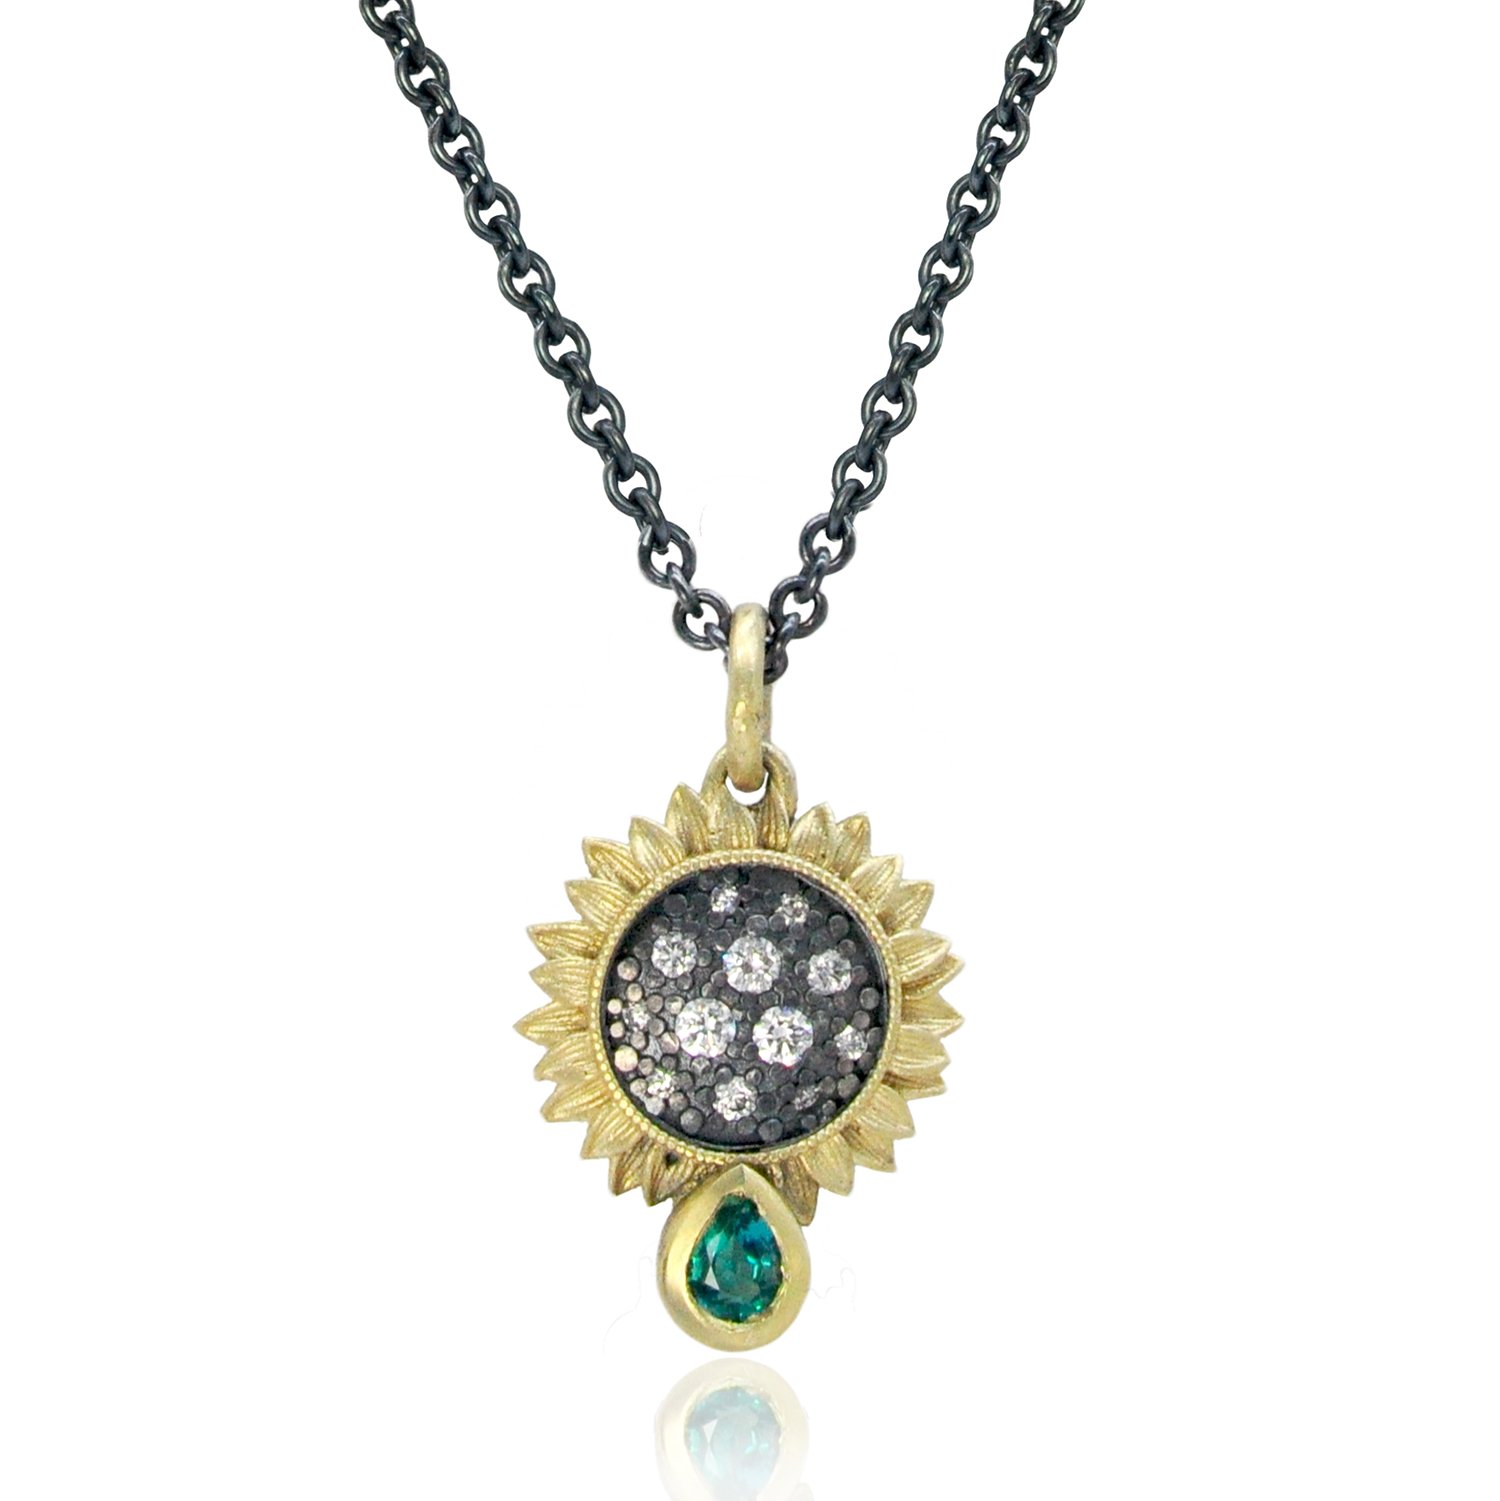 Marie Lichtenberg Jewelry Rose Gold Enamel Prayers Locket Pendant necklace